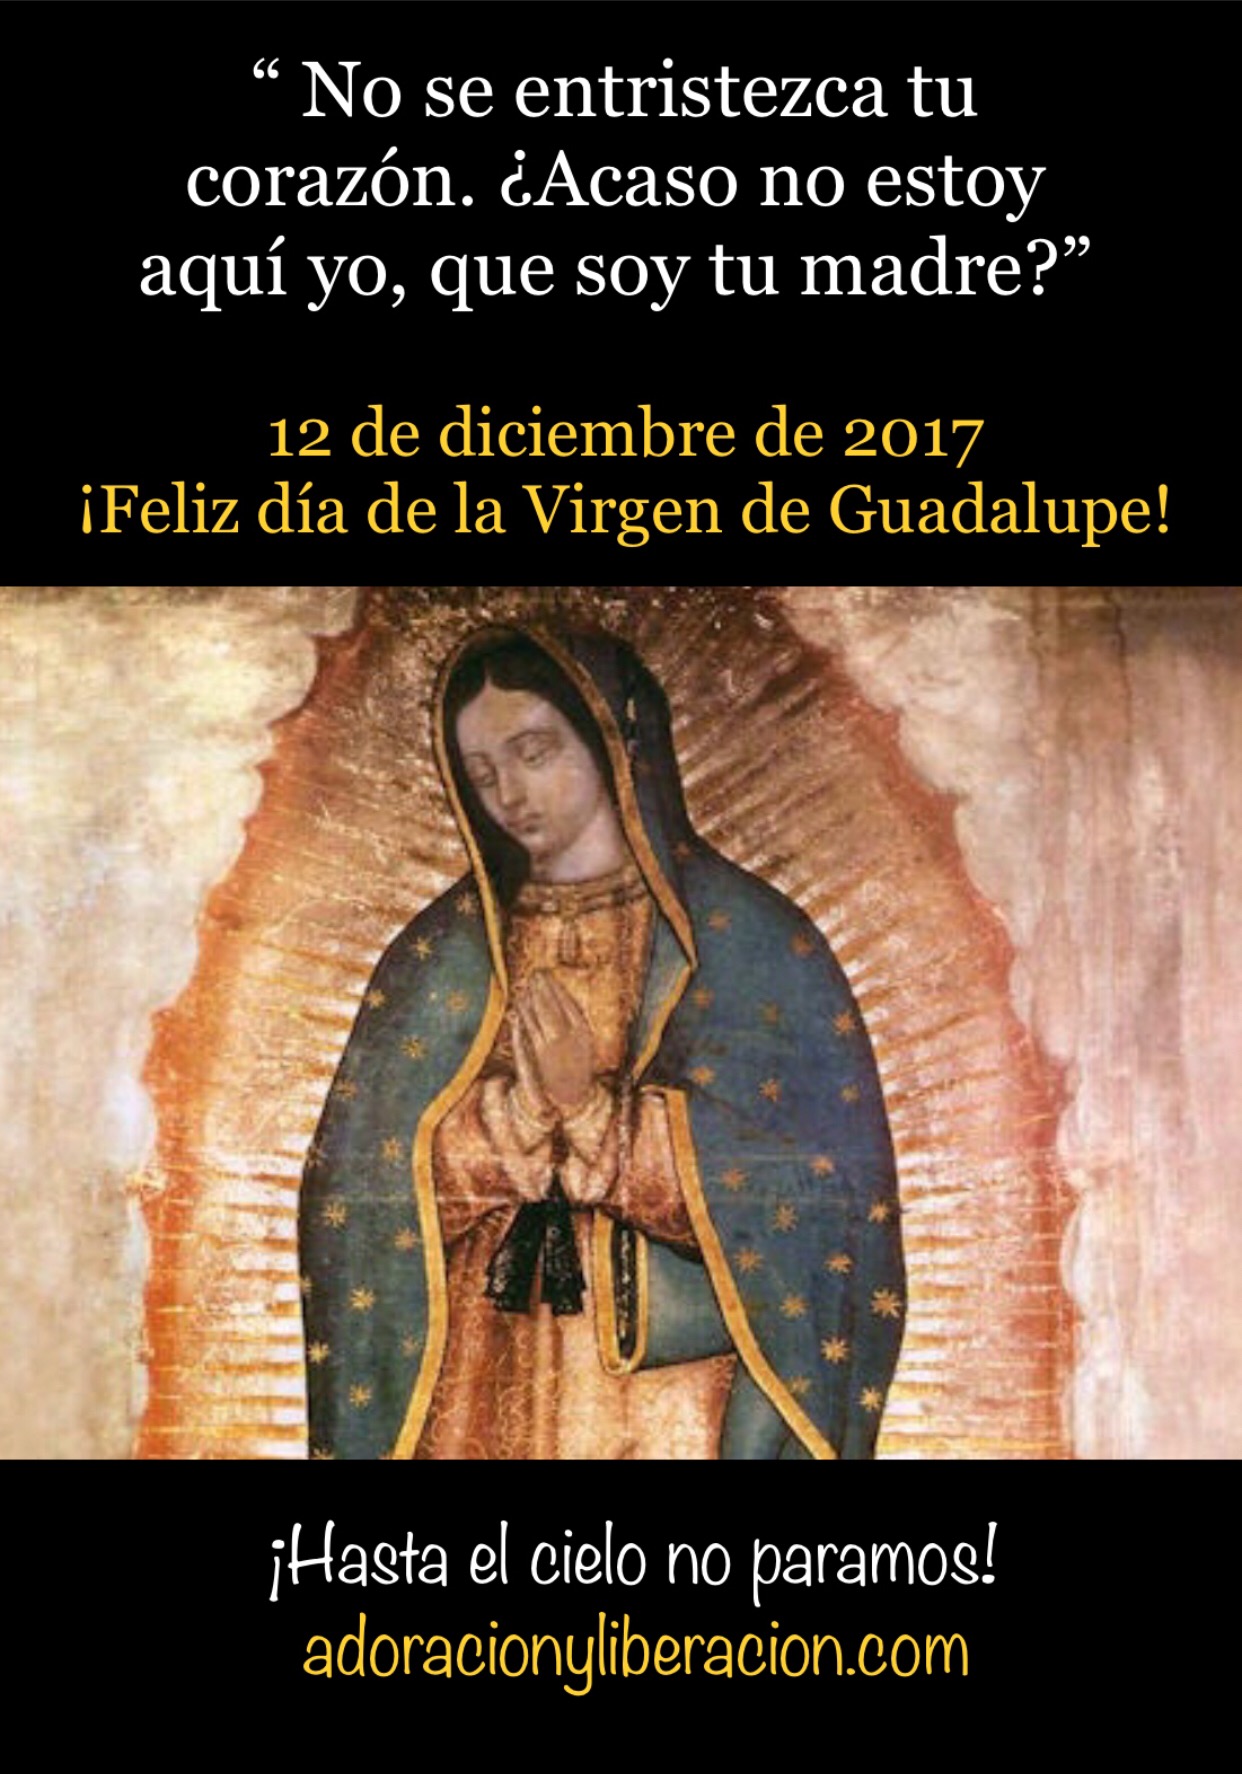 Feliz día de la Virgen de Guadalupe! - Infovaticana Blogs